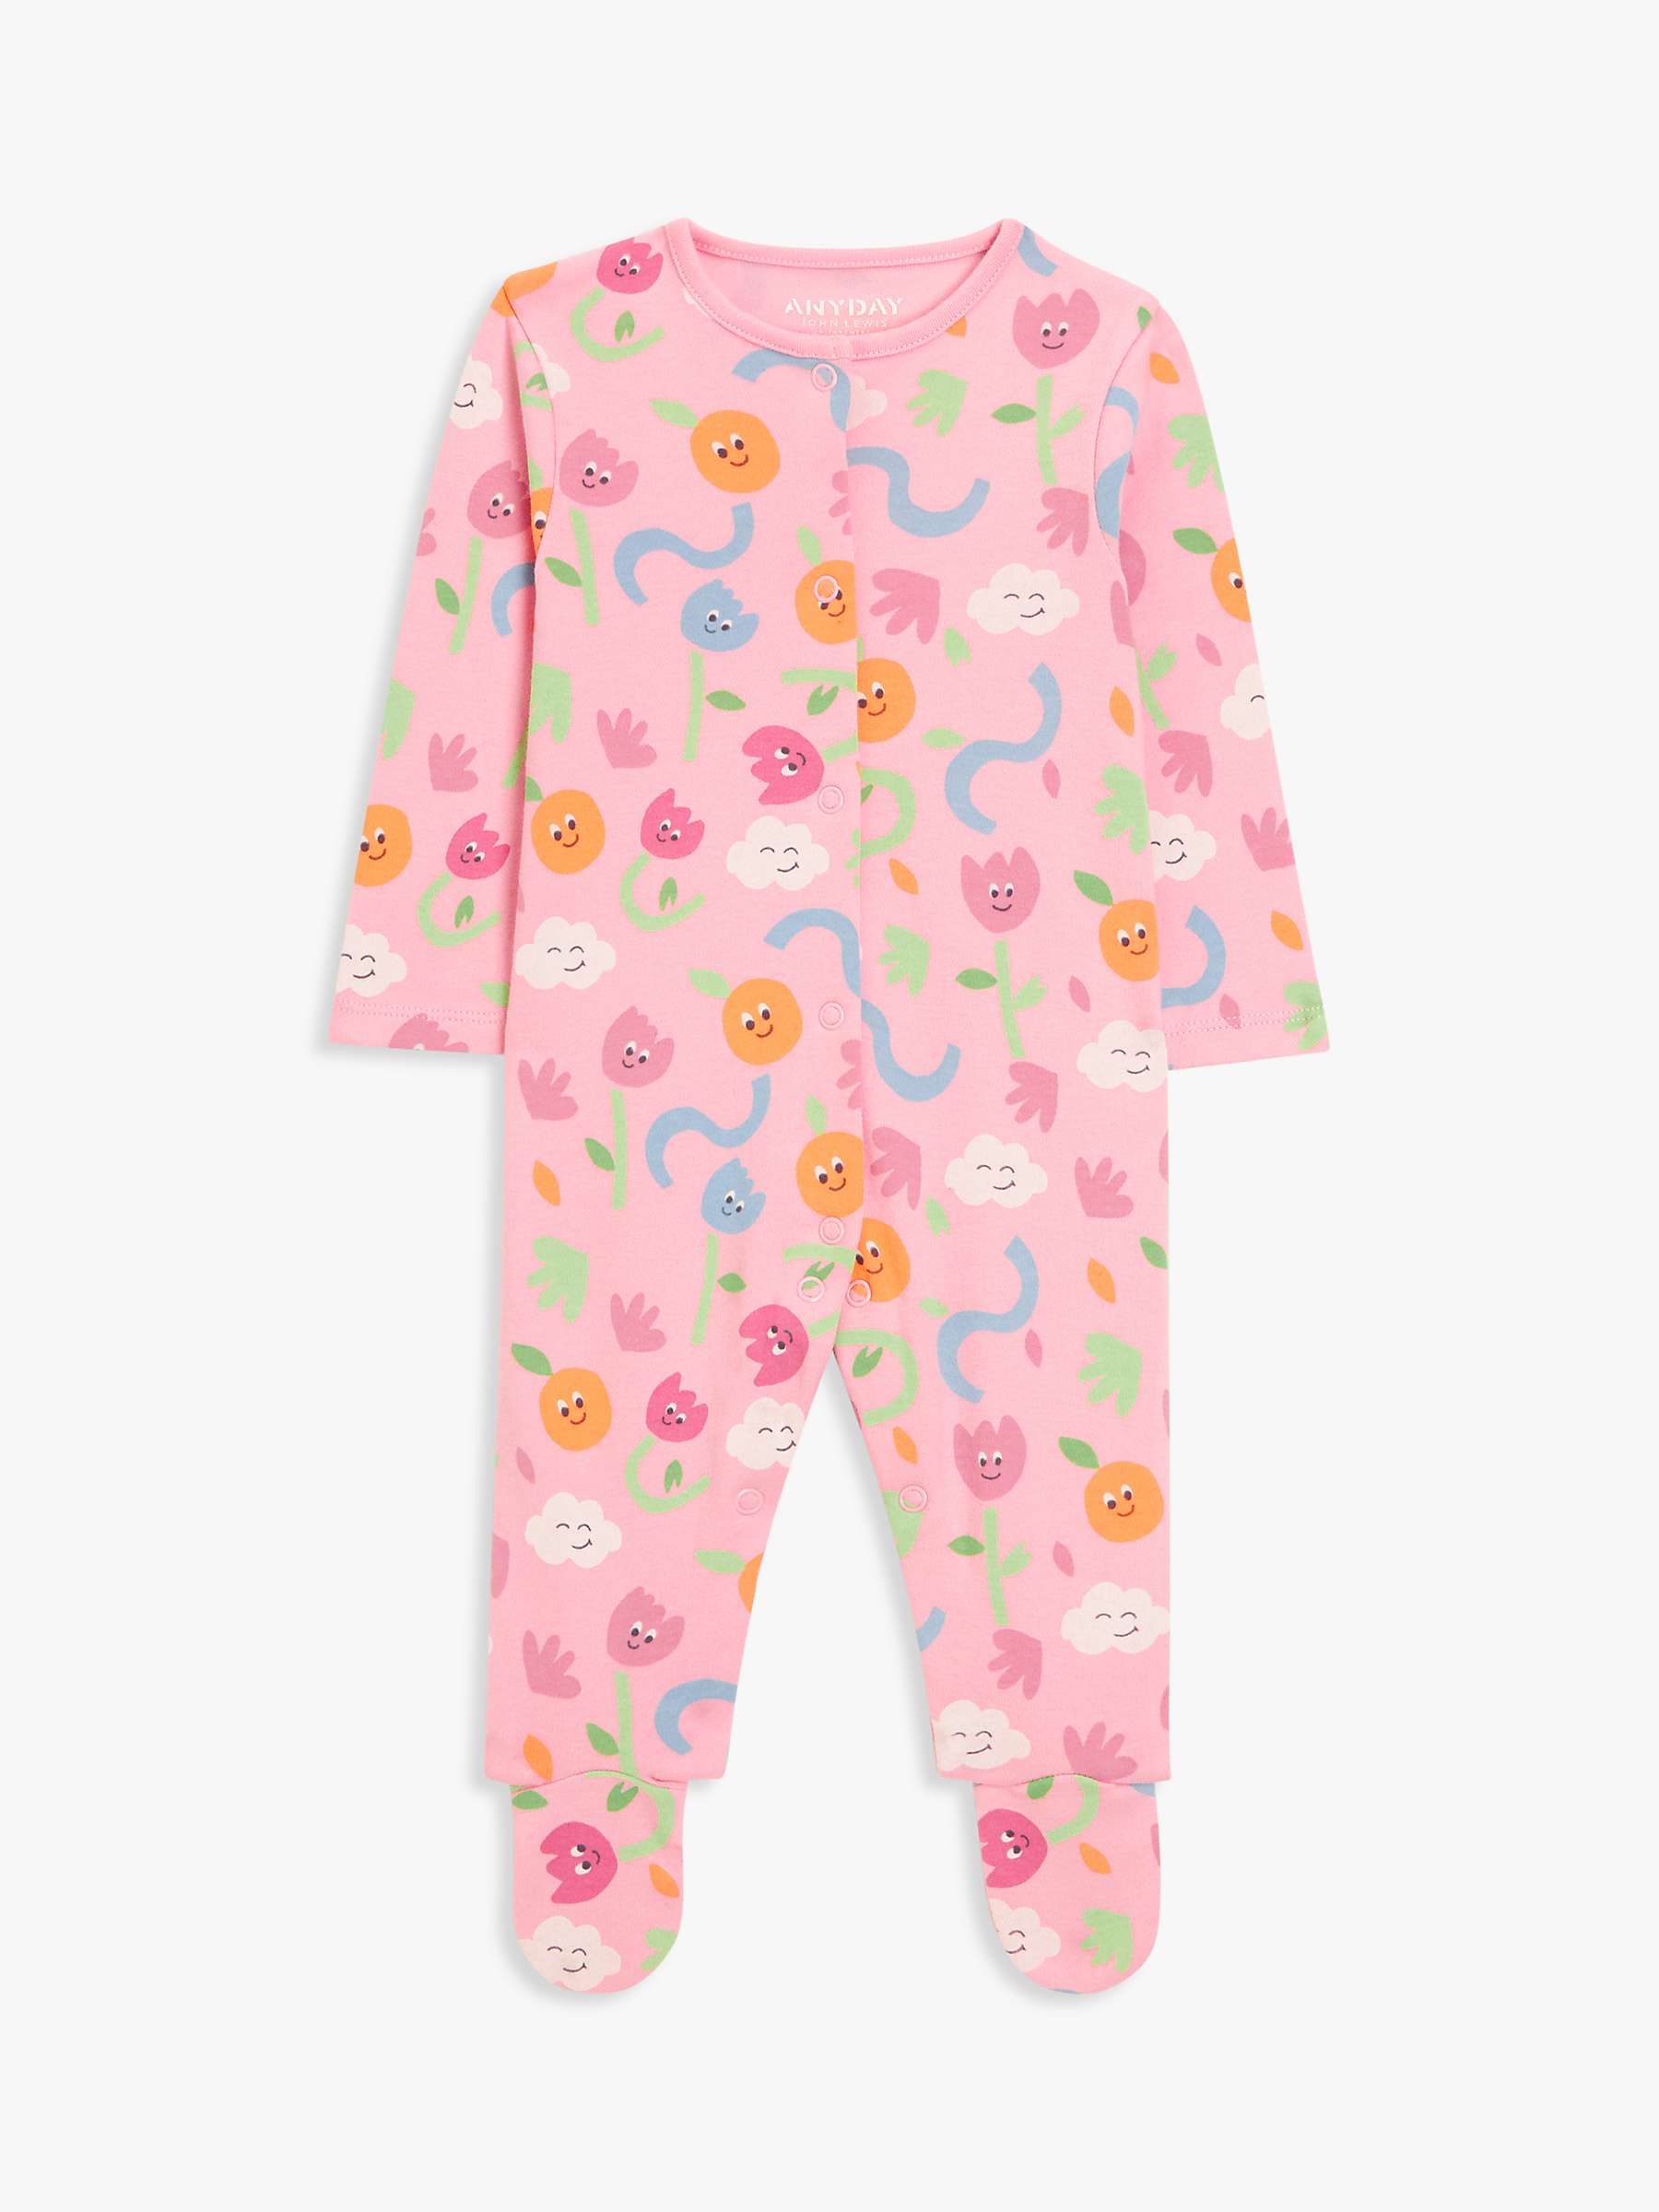 Buy John Lewis ANYDAY Baby Floral Print Sleepsuit, Pink/Multi Online at johnlewis.com